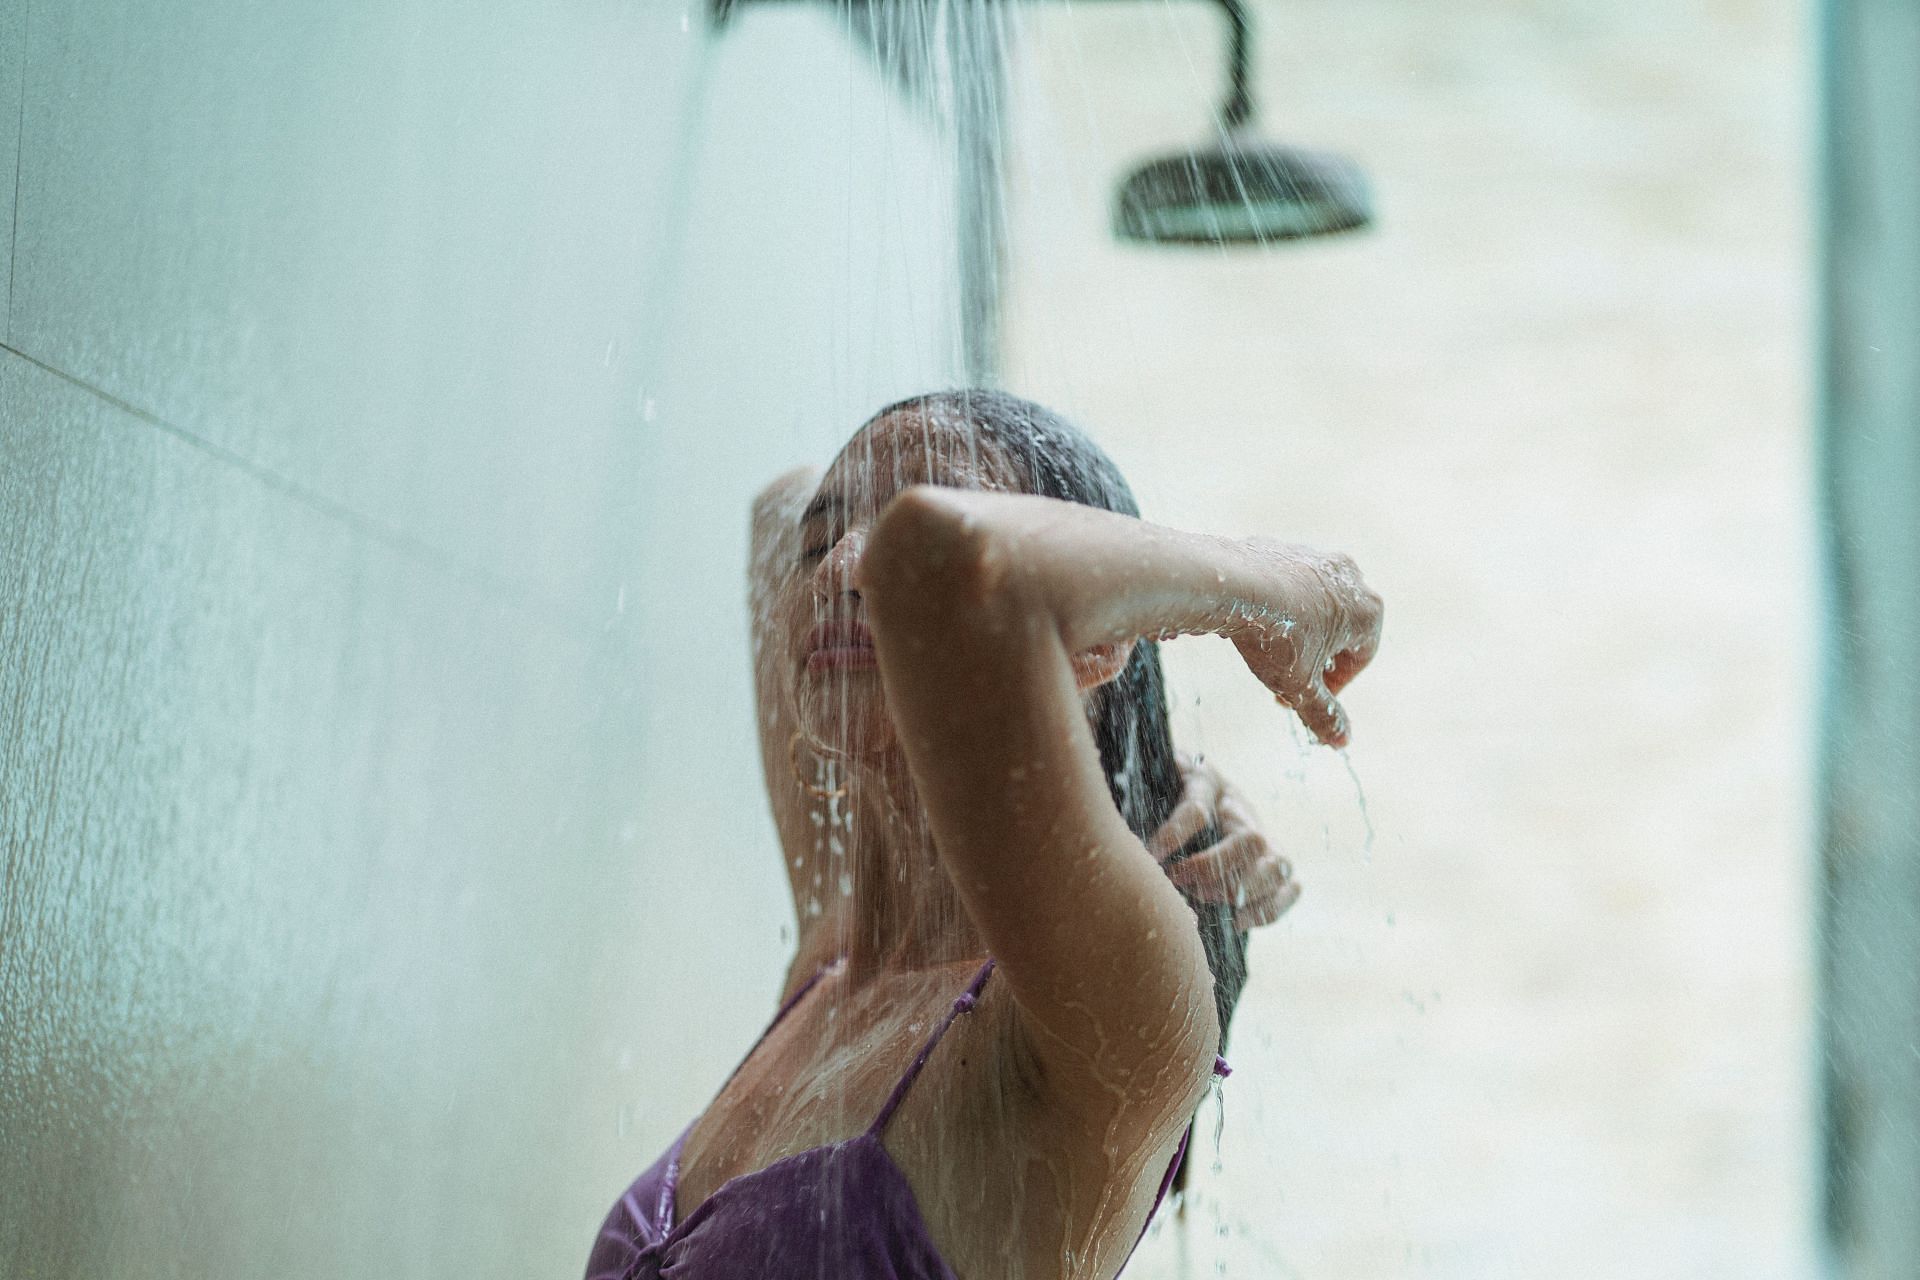 Itchy skin after shower (Image via Pexels/Armin Rimoldi)